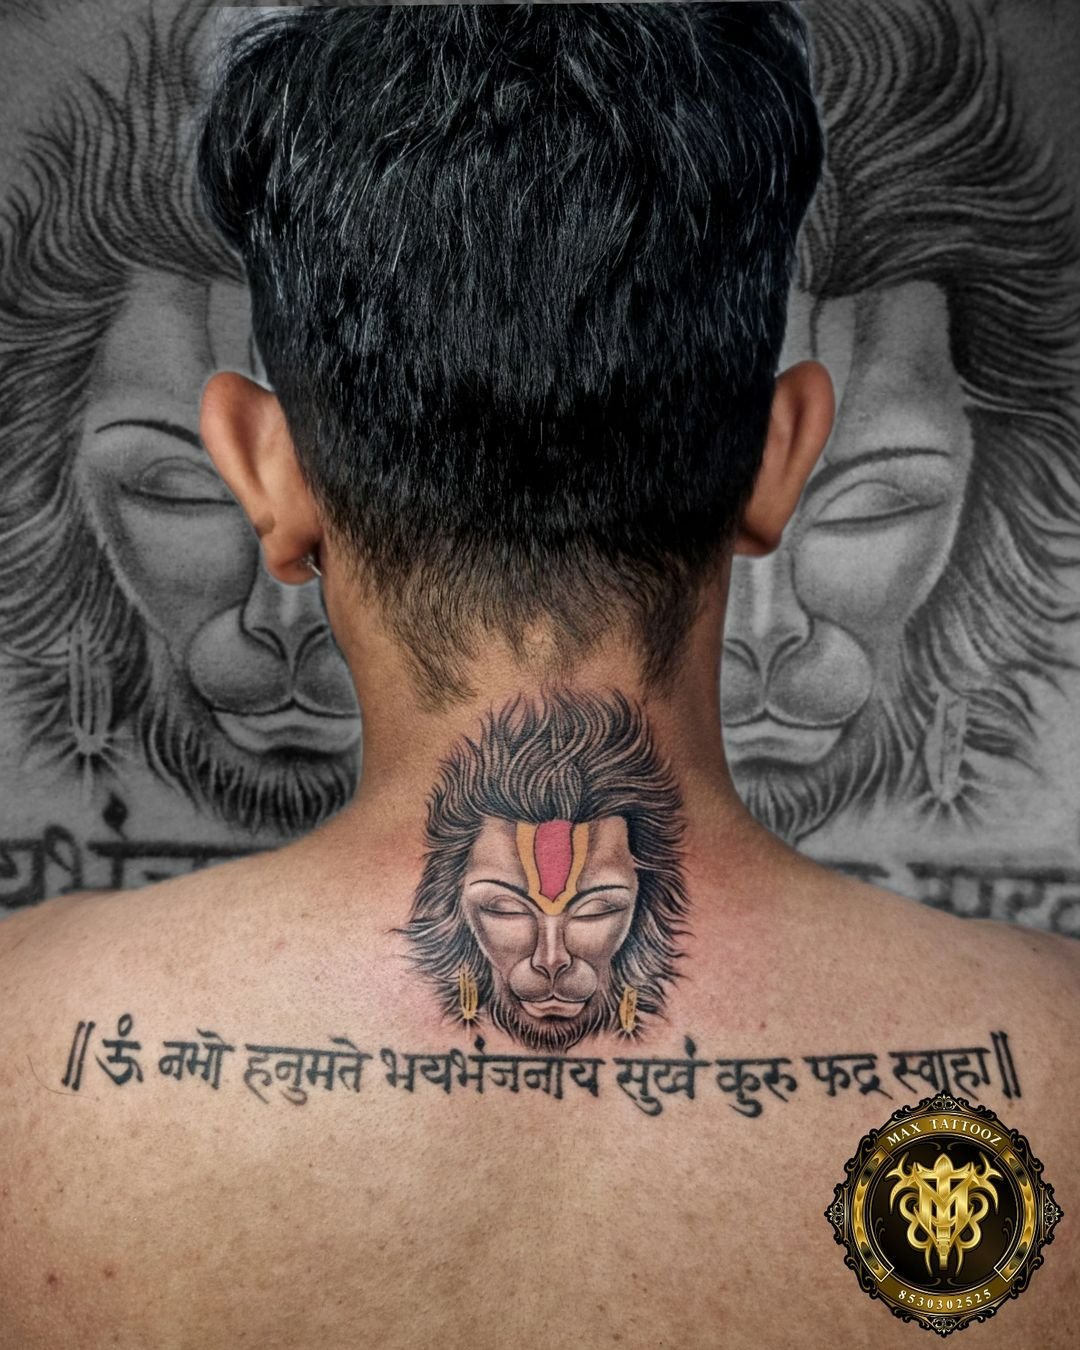 Twitter 上的samurai tattoo mehsanahanuman ji tattoo Hanuman tattoo  Bajrangbali tattoo Hanuman ji nu tattoo Hanuman dada tattoo  httpstcoHaqiLYaGd7  Twitter